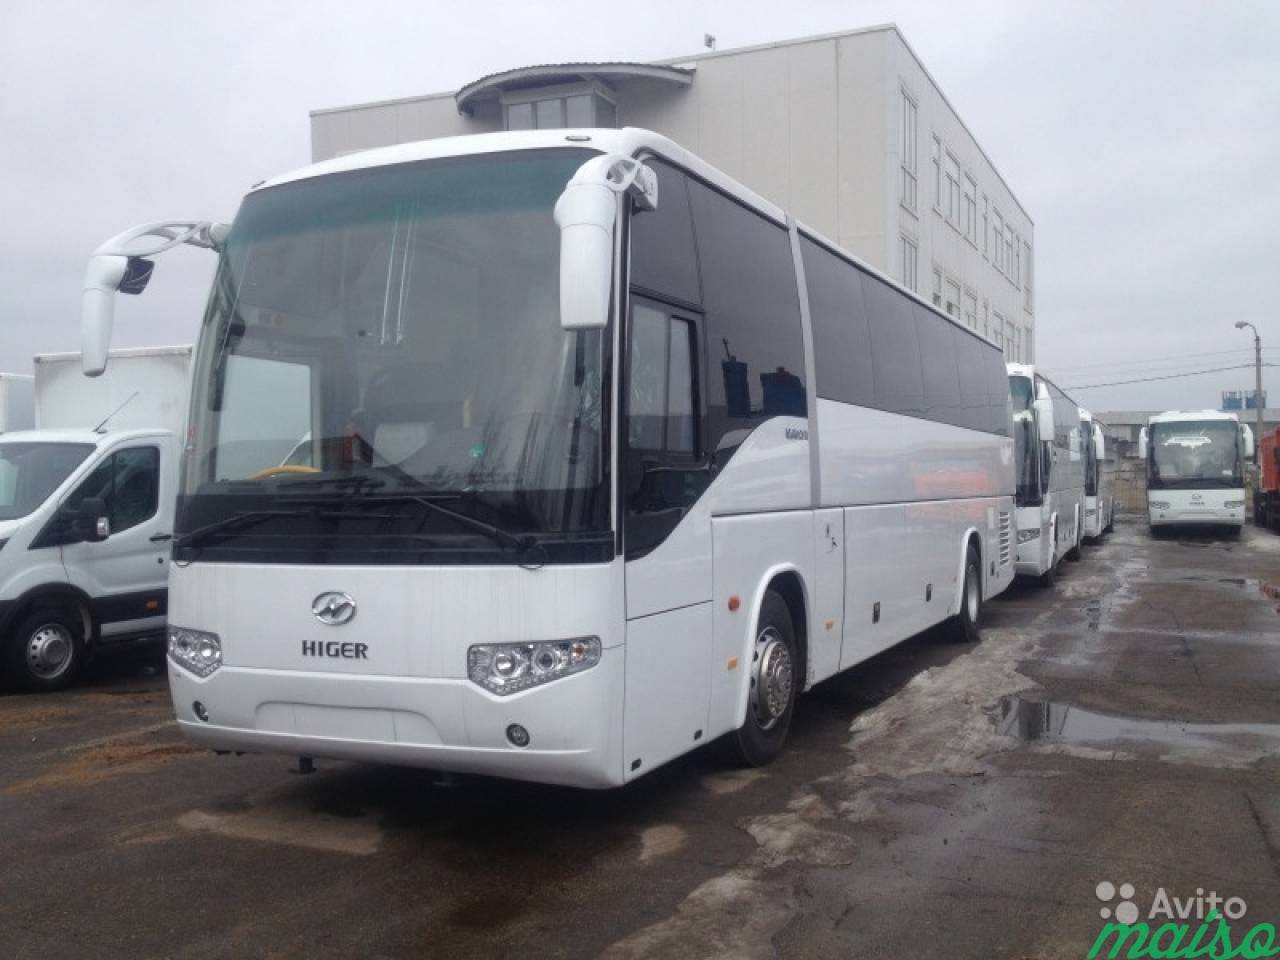 Автобус Хайгер 6129 47+1+1 (холод,куллер, WC) в Санкт-Петербурге. Фото 1